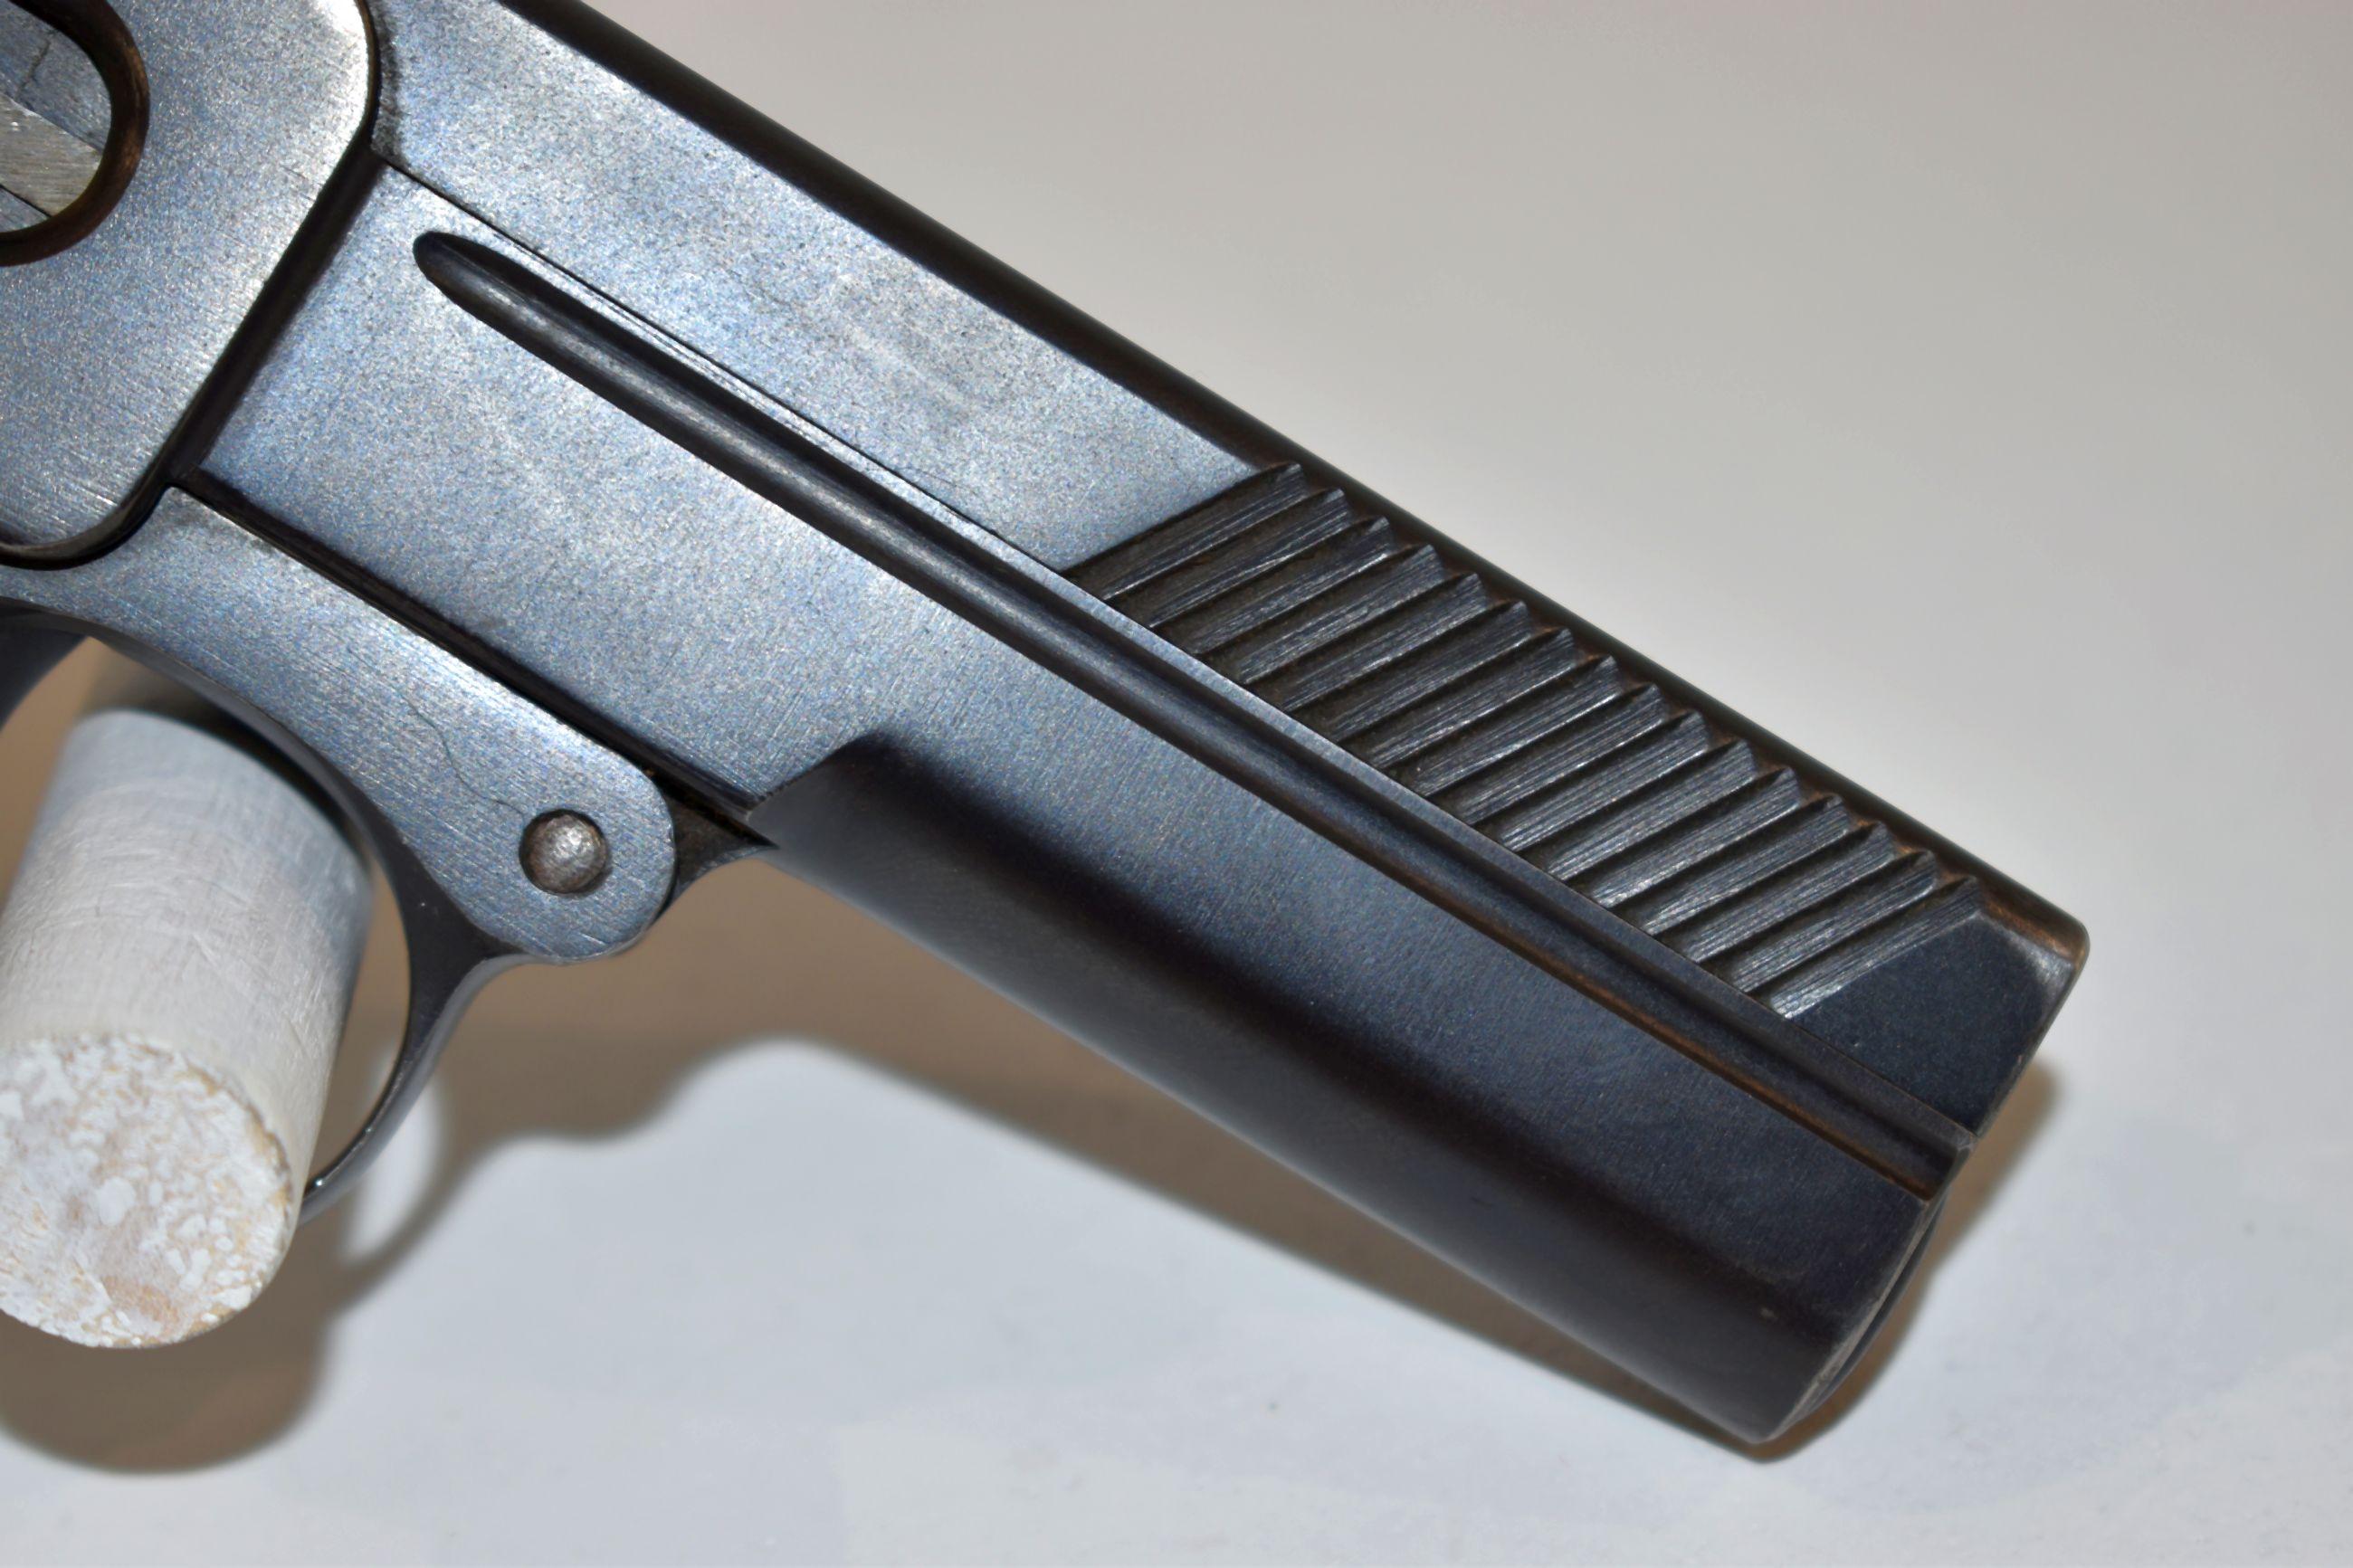 Dreysc Germany Made 9MM Semi Auto Pistol, SN: 237151, one magazine